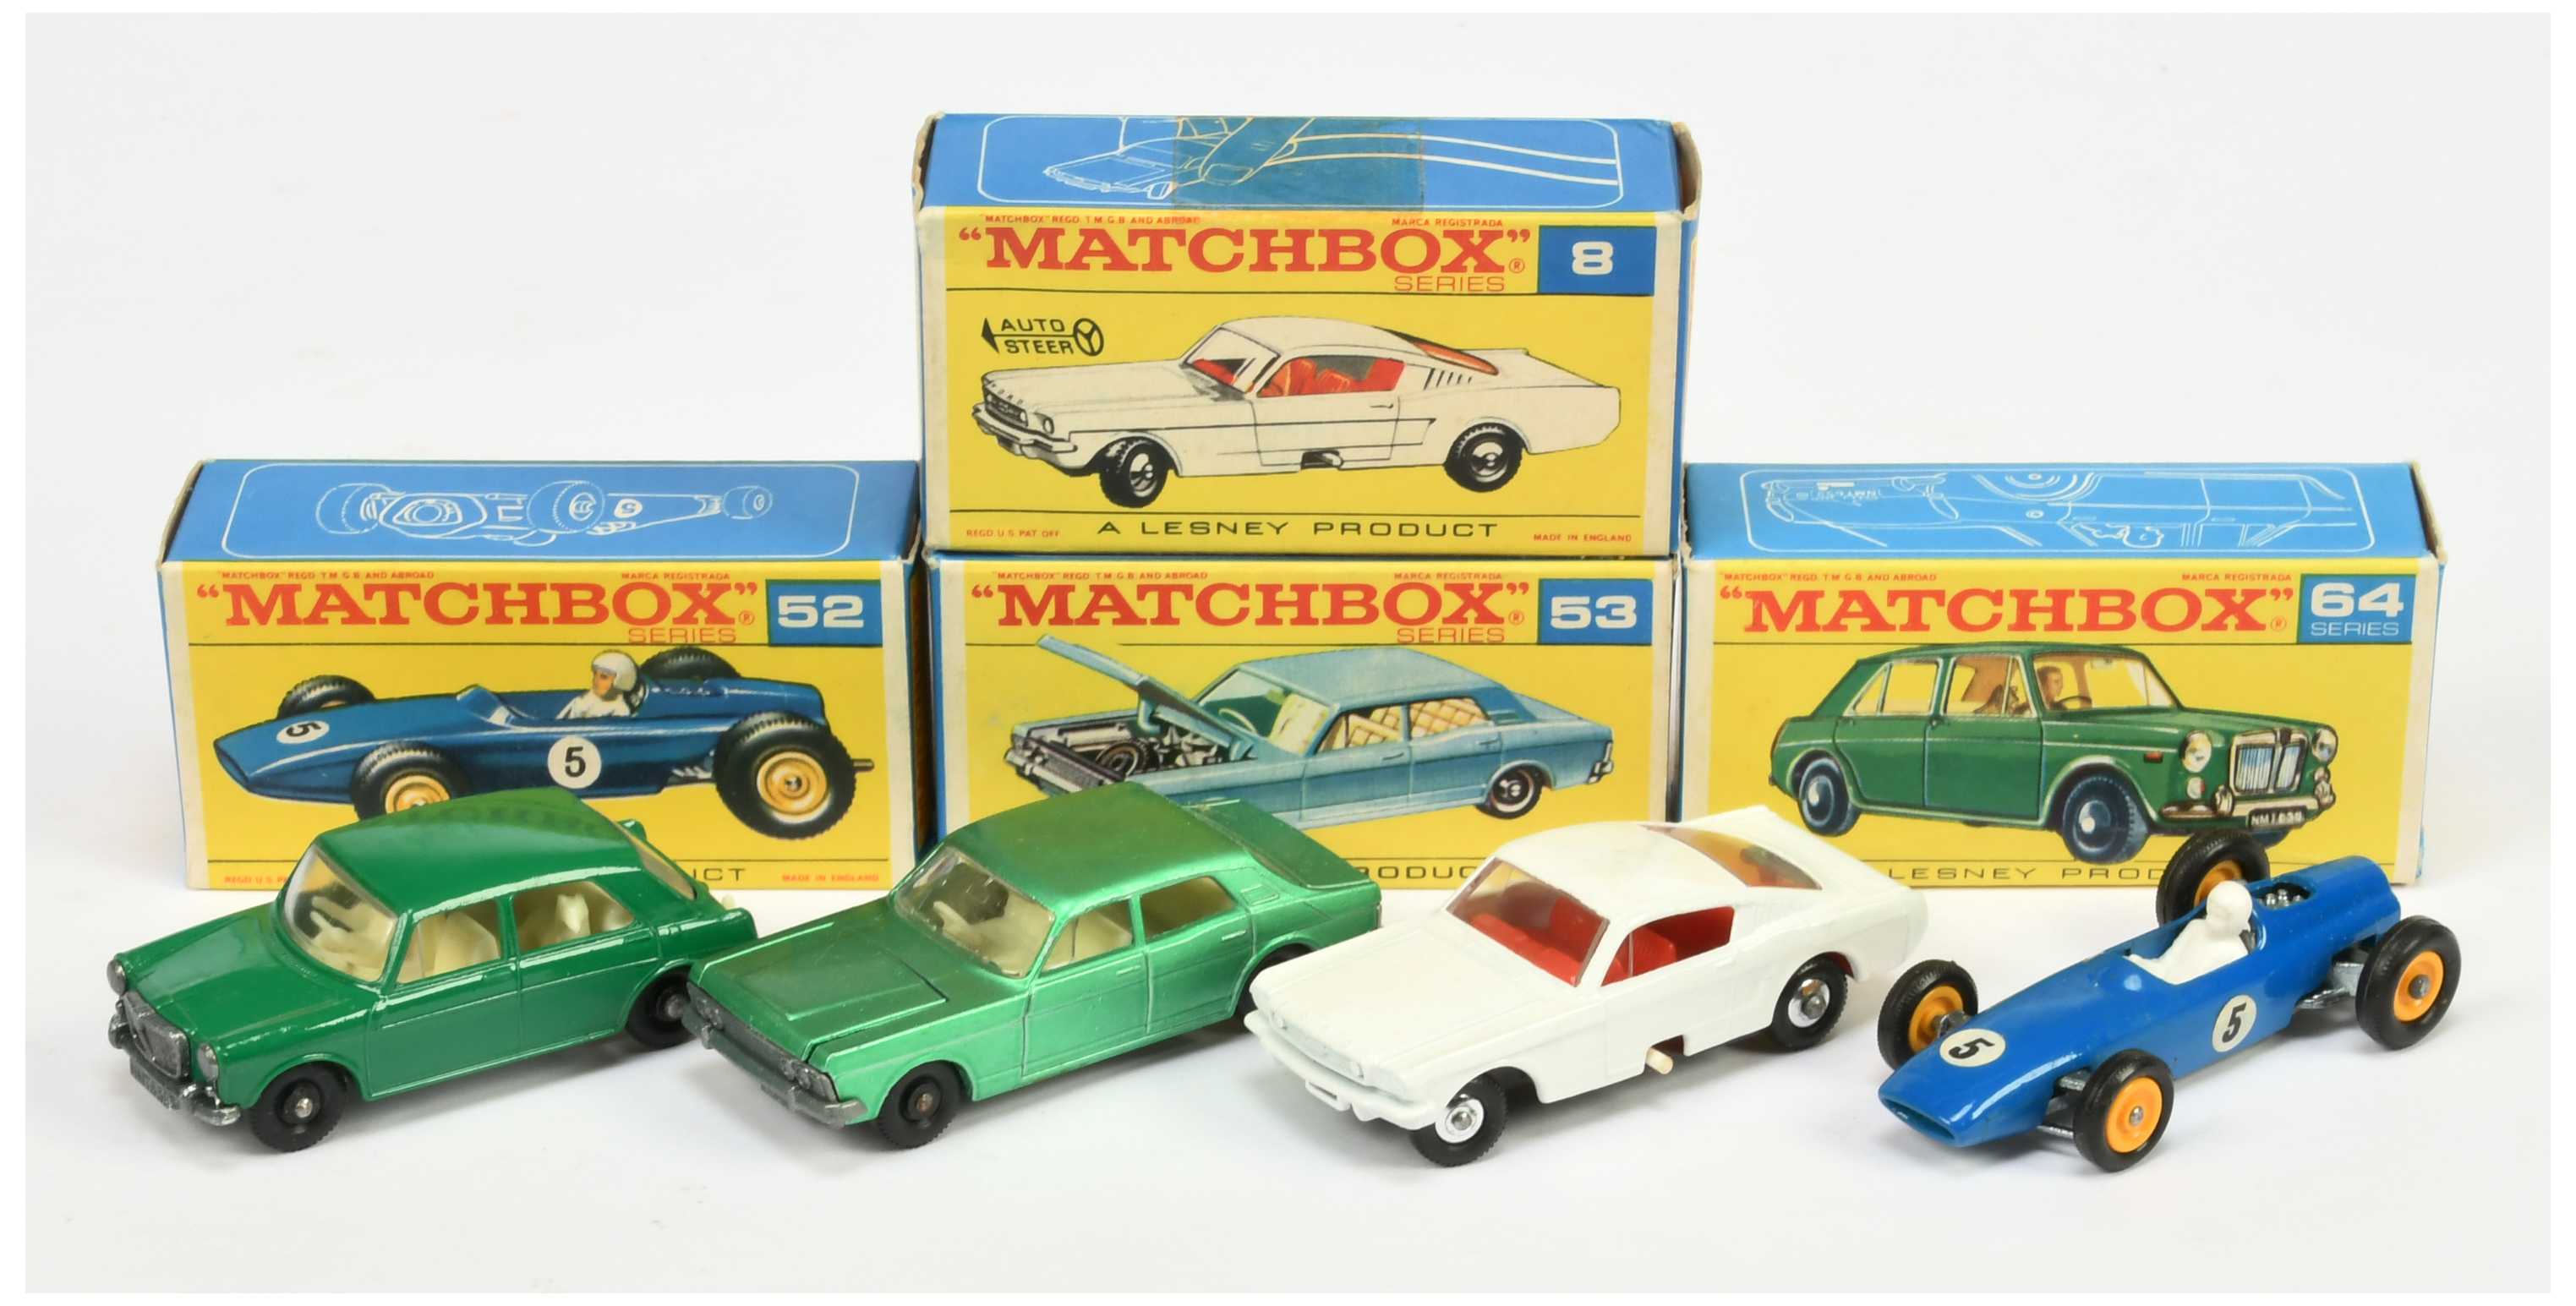 Matchbox Regular Wheels group (1) 8e Ford Mustang - white - box has tape removal mark (2) 53c For...